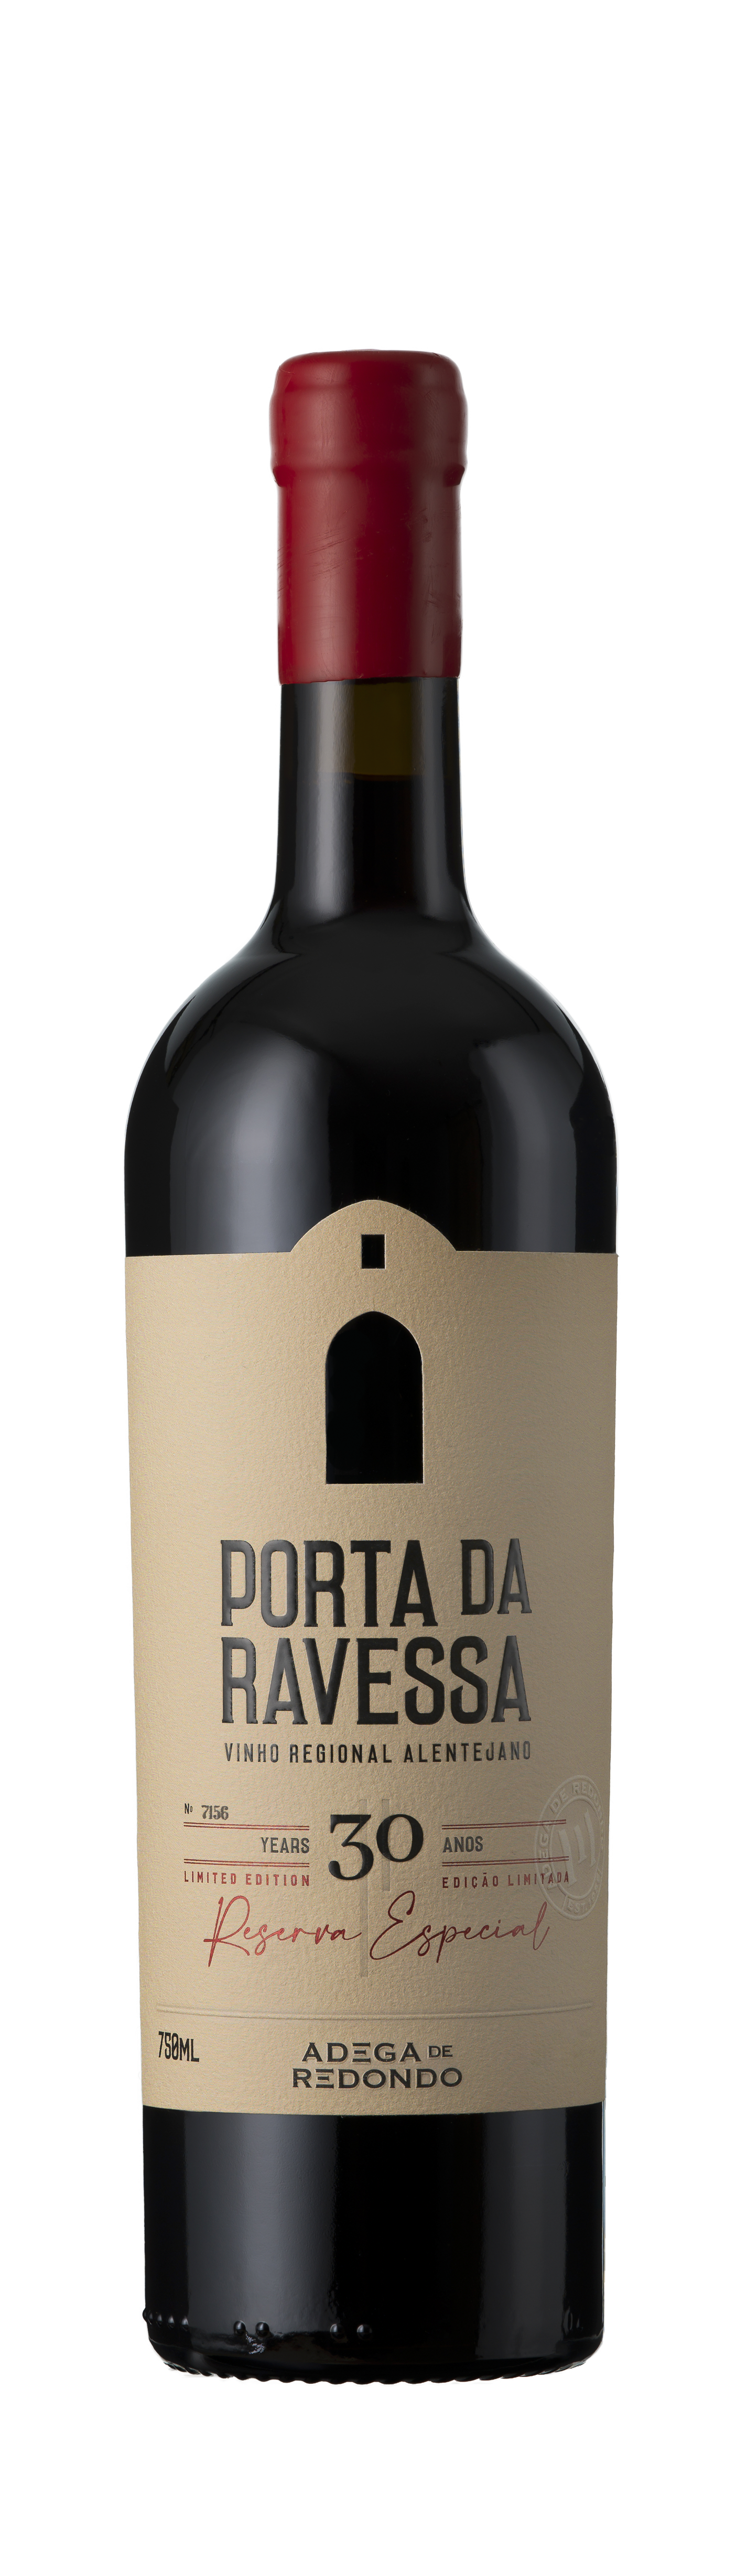 Adega de Redondo, Porta da Ravessa Reserva especial Tinto (30yr), IGP  Alentejo, Portugal, 2017 - Alliance Wine